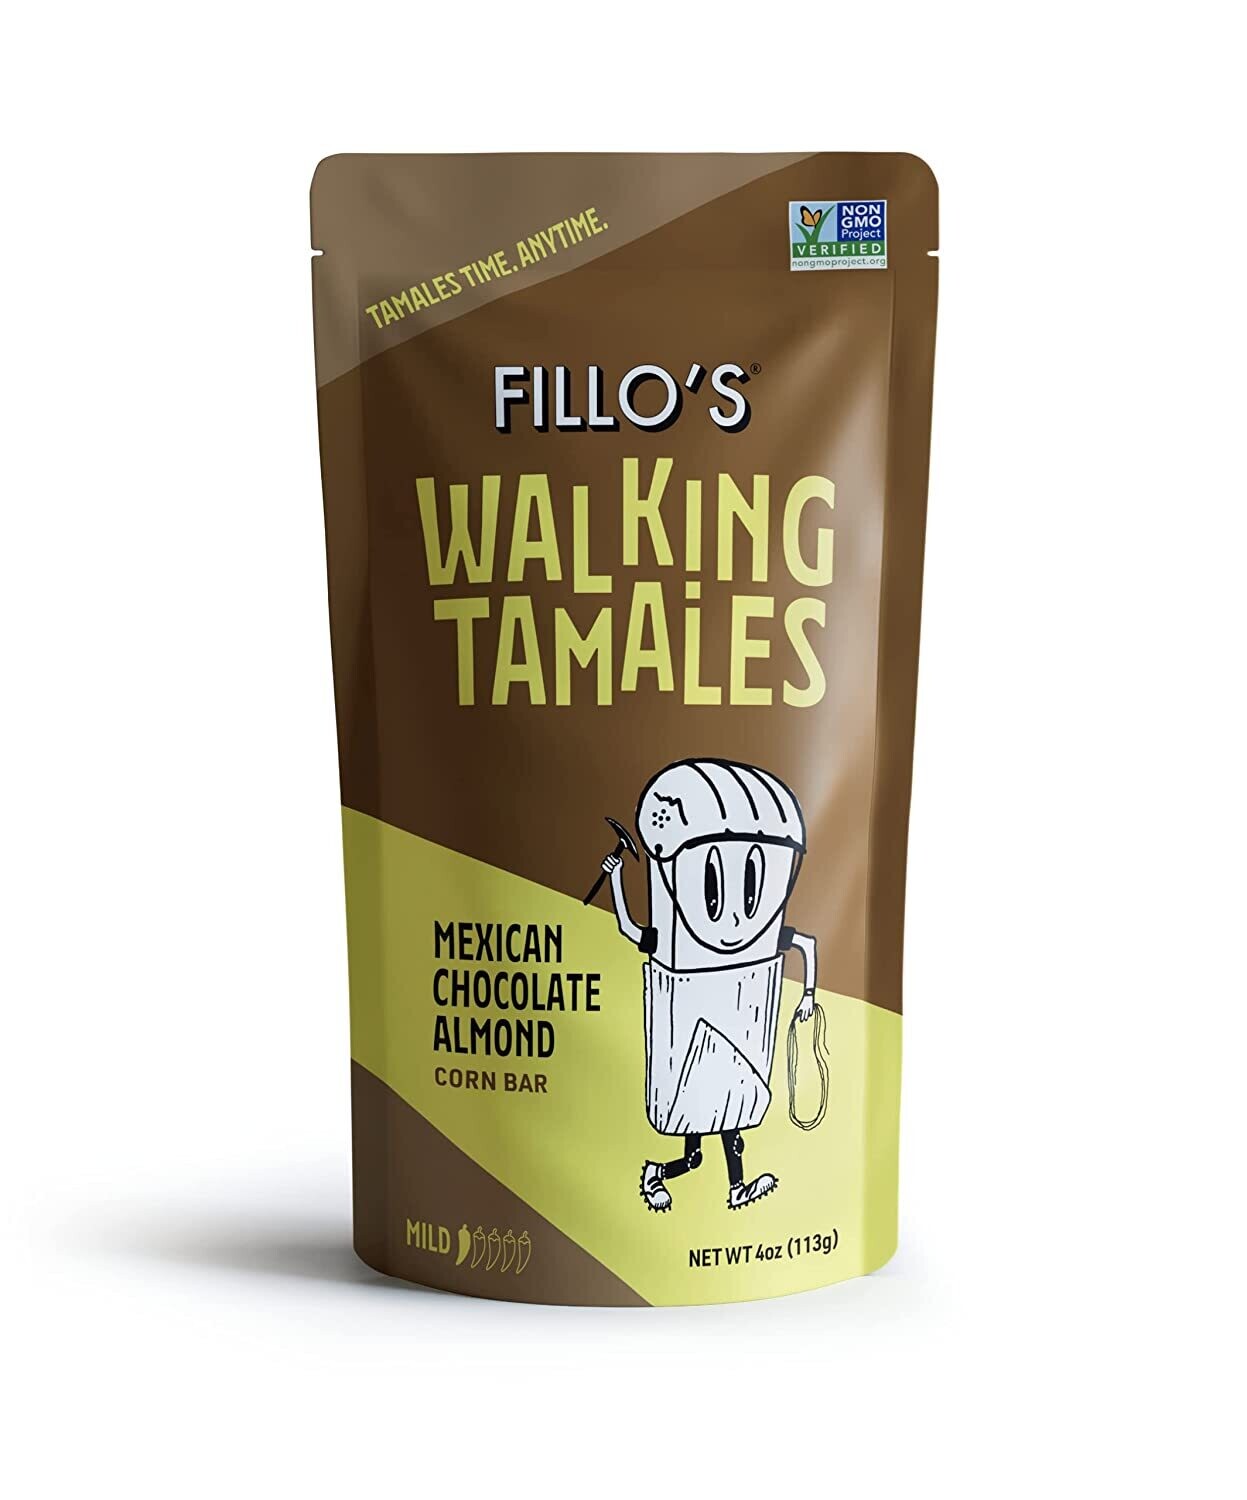 Fillo's Walking Tamales Corn Bar - Mexican Chocolate Almond (mild)